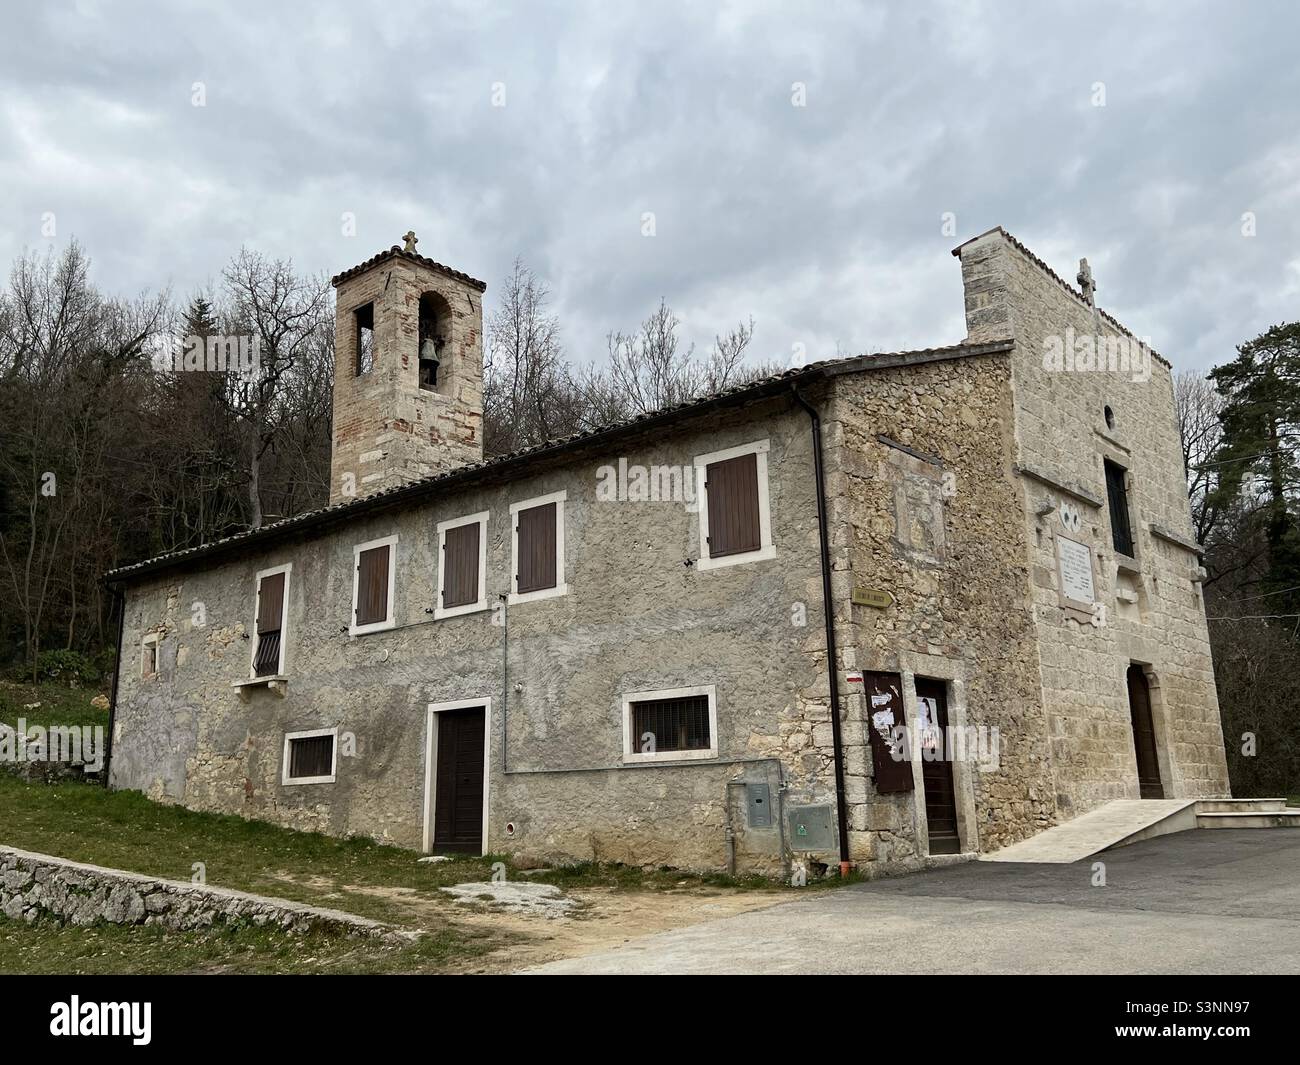 Church of San Bartolomeo, Piagge, Ascoli Piceno, Italy Stock Photo